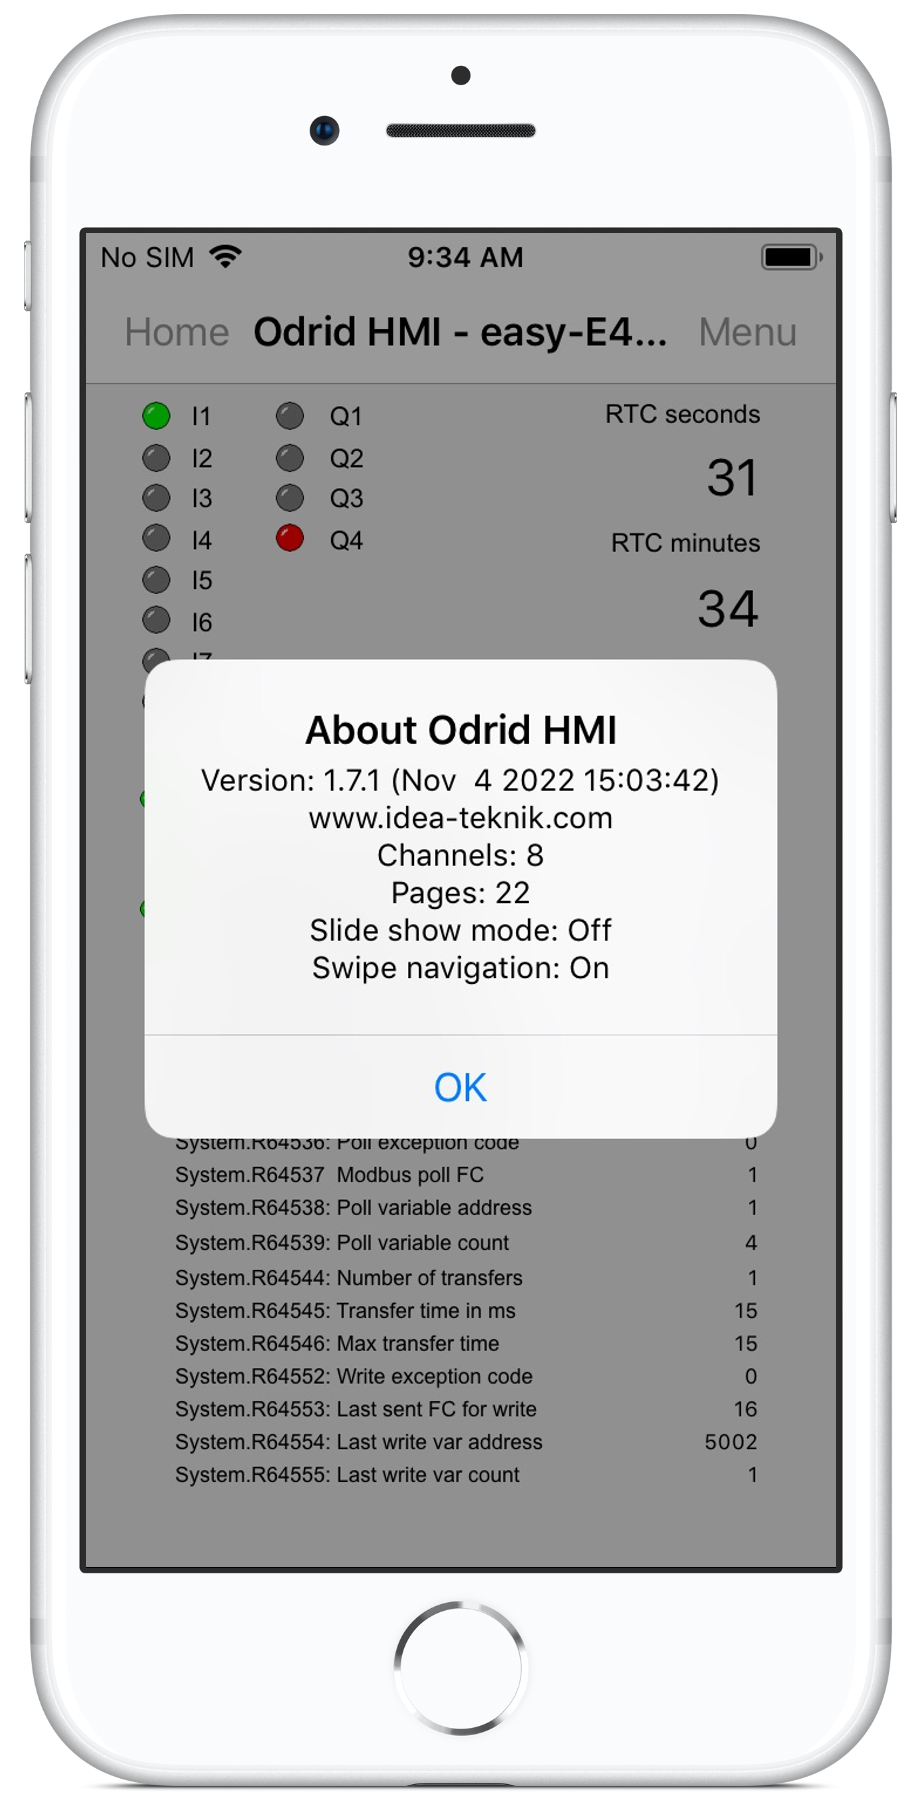 Odrid HMI 1.7.1 - About